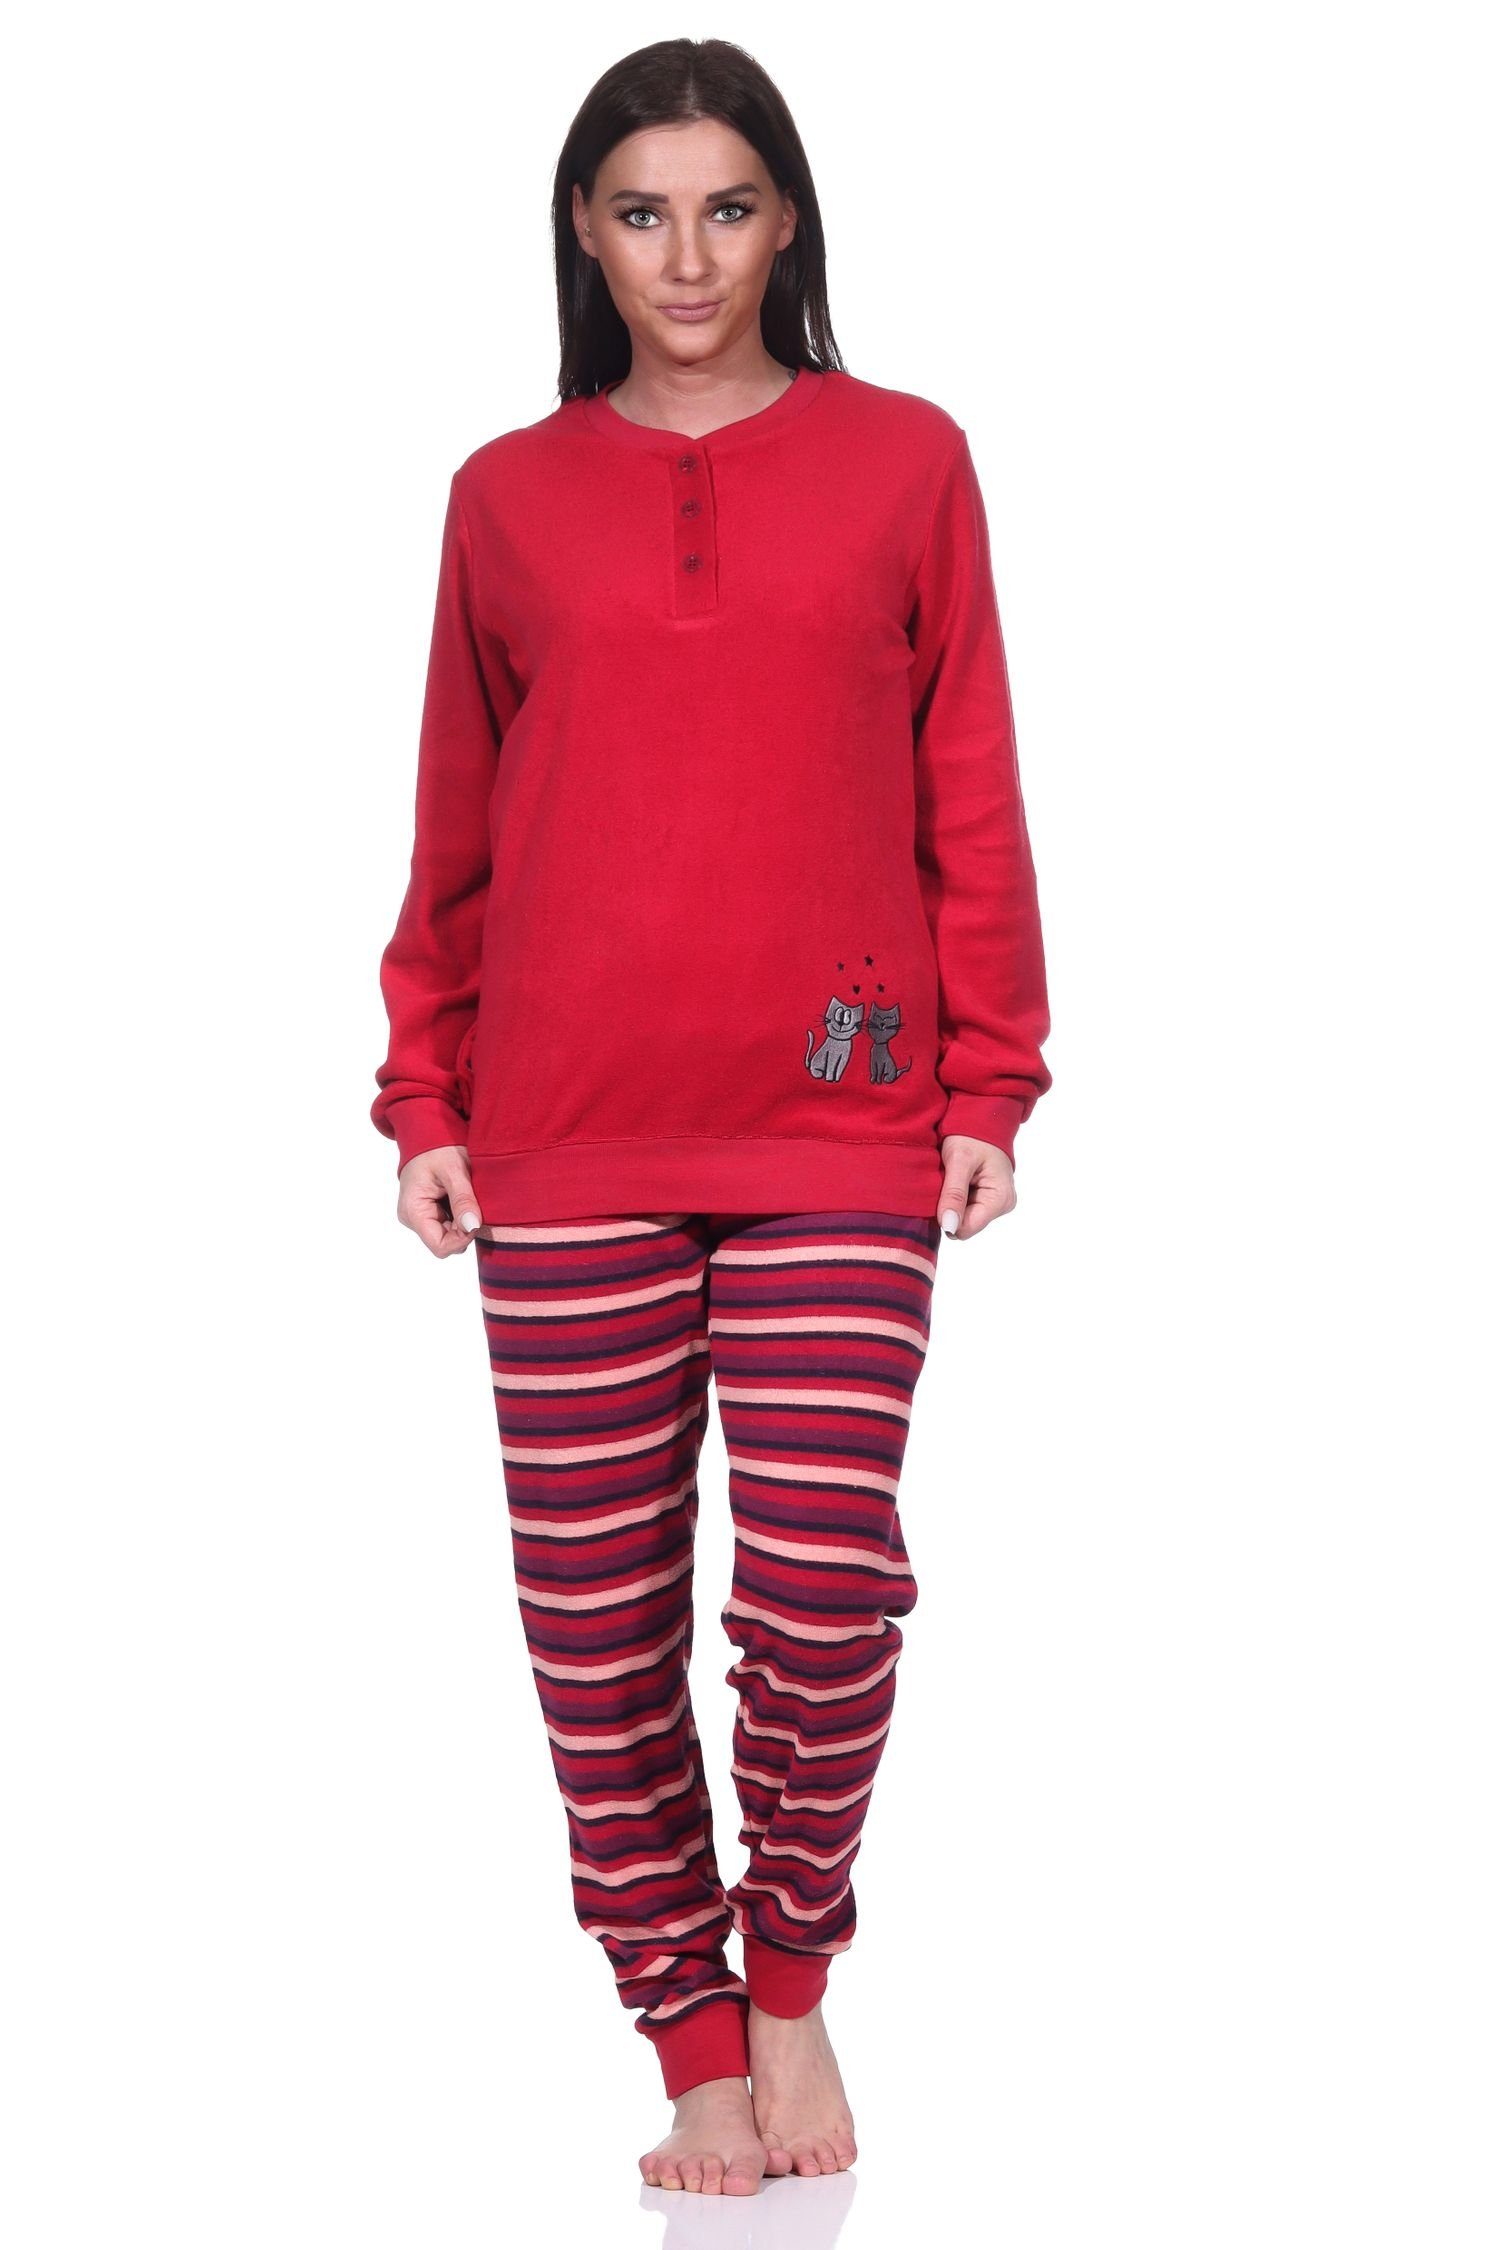 langarm süßem Pyjama, Normann Katzen-Motiv Pyjama Frottee Schlafanzug Damen mit